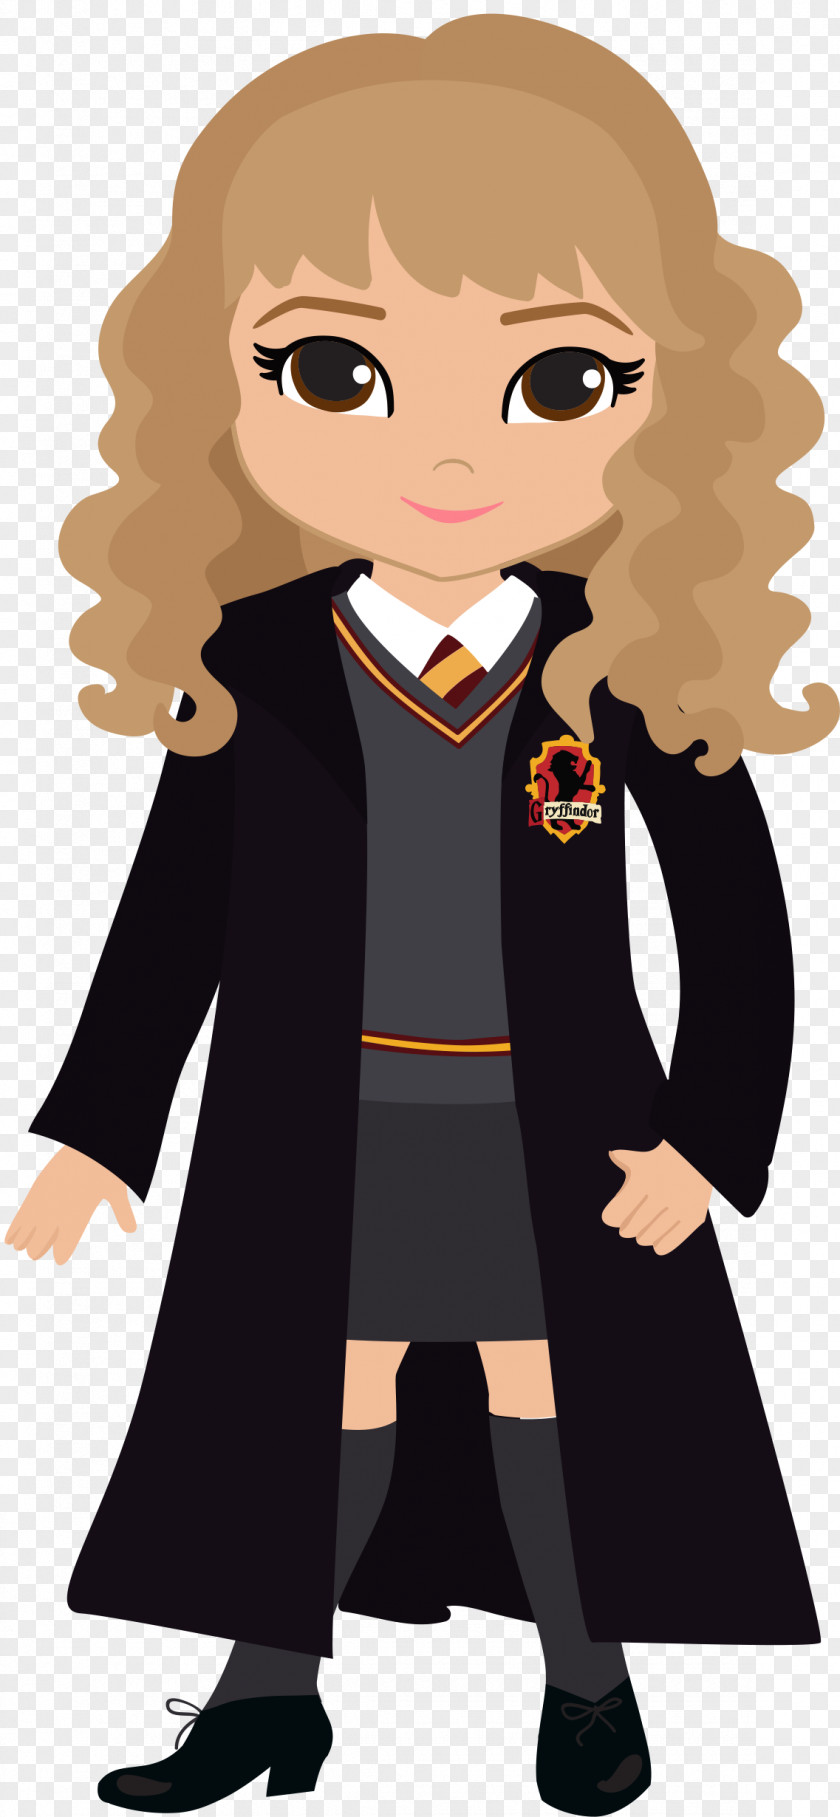 Harry Potter Hermione Granger Ron Weasley Garrï Bellatrix Lestrange Clip Art PNG